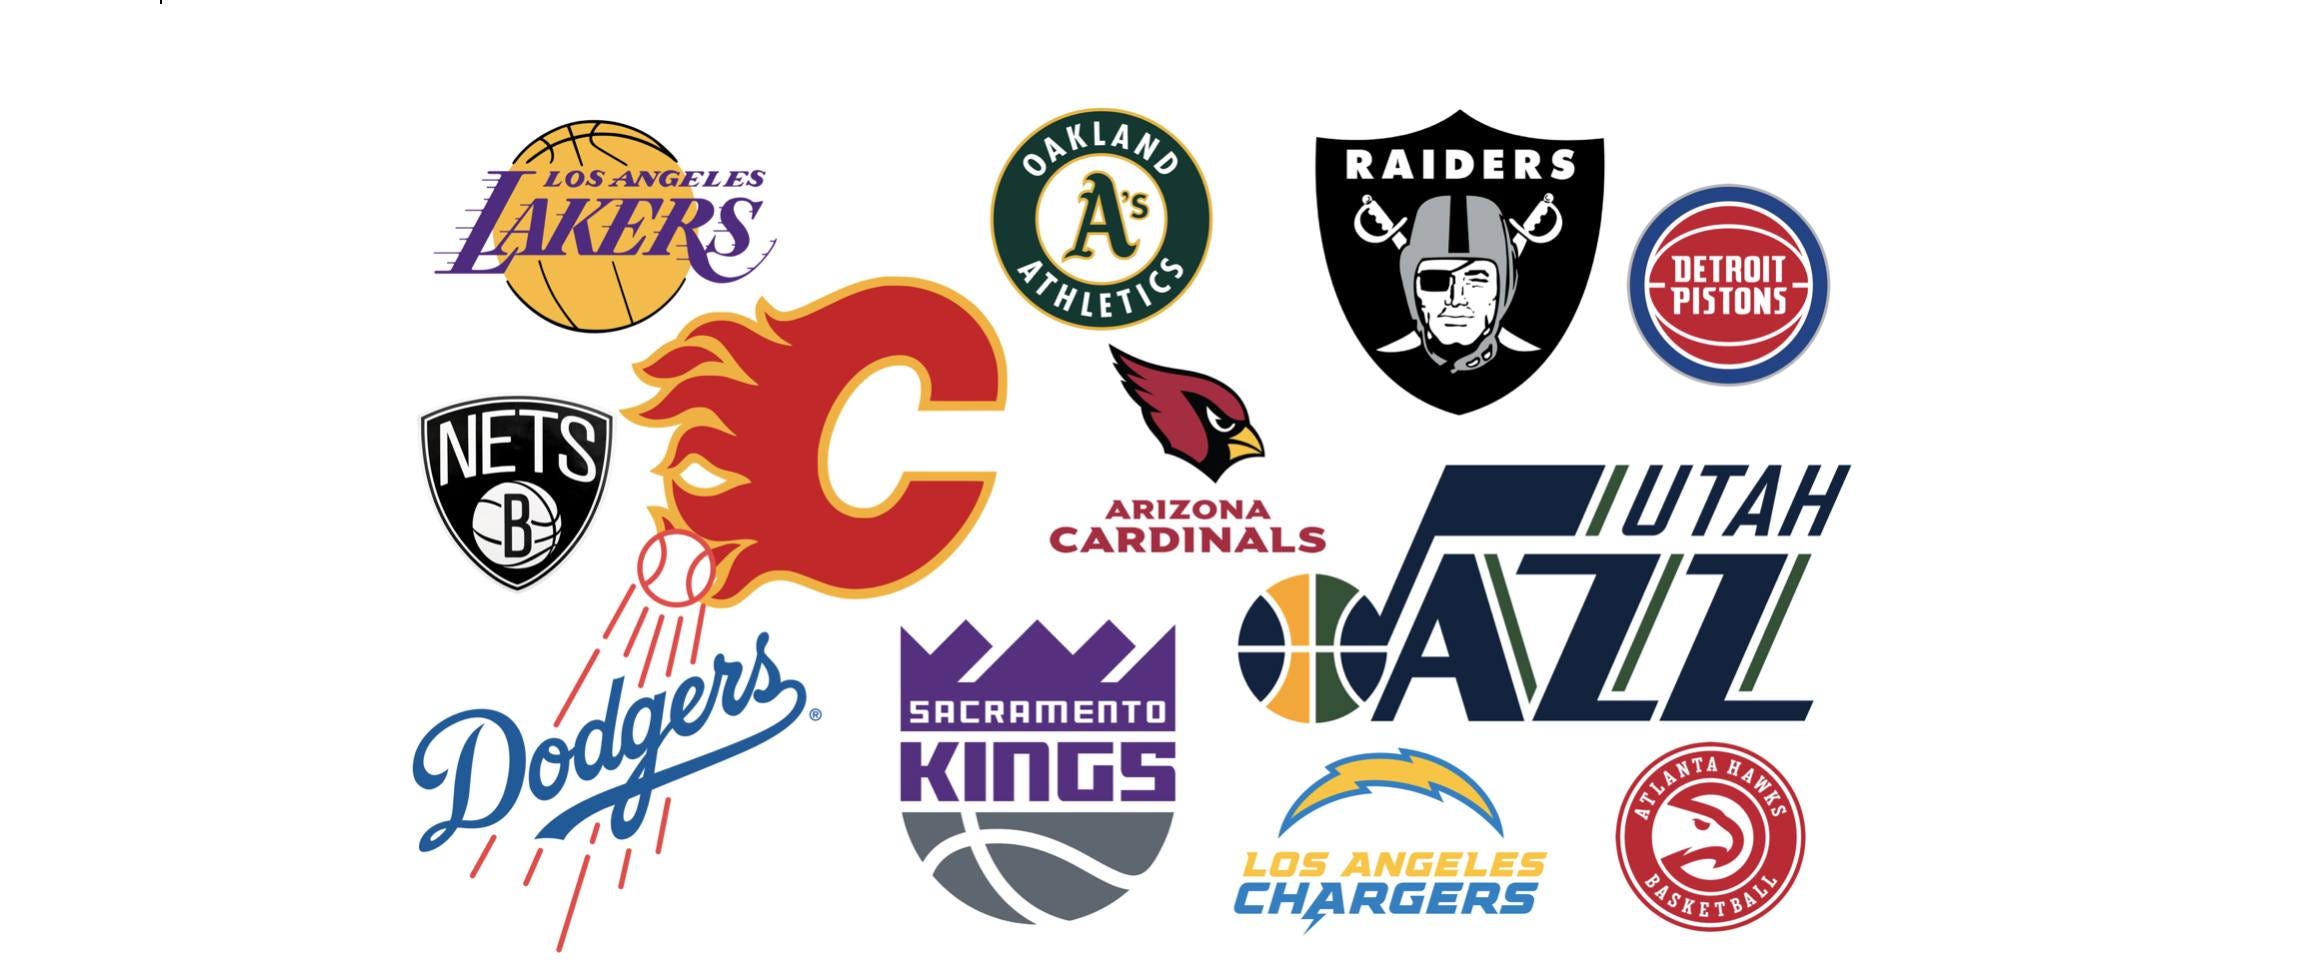 Los Angeles Lakers History - Team Origins, Logos & Jerseys 